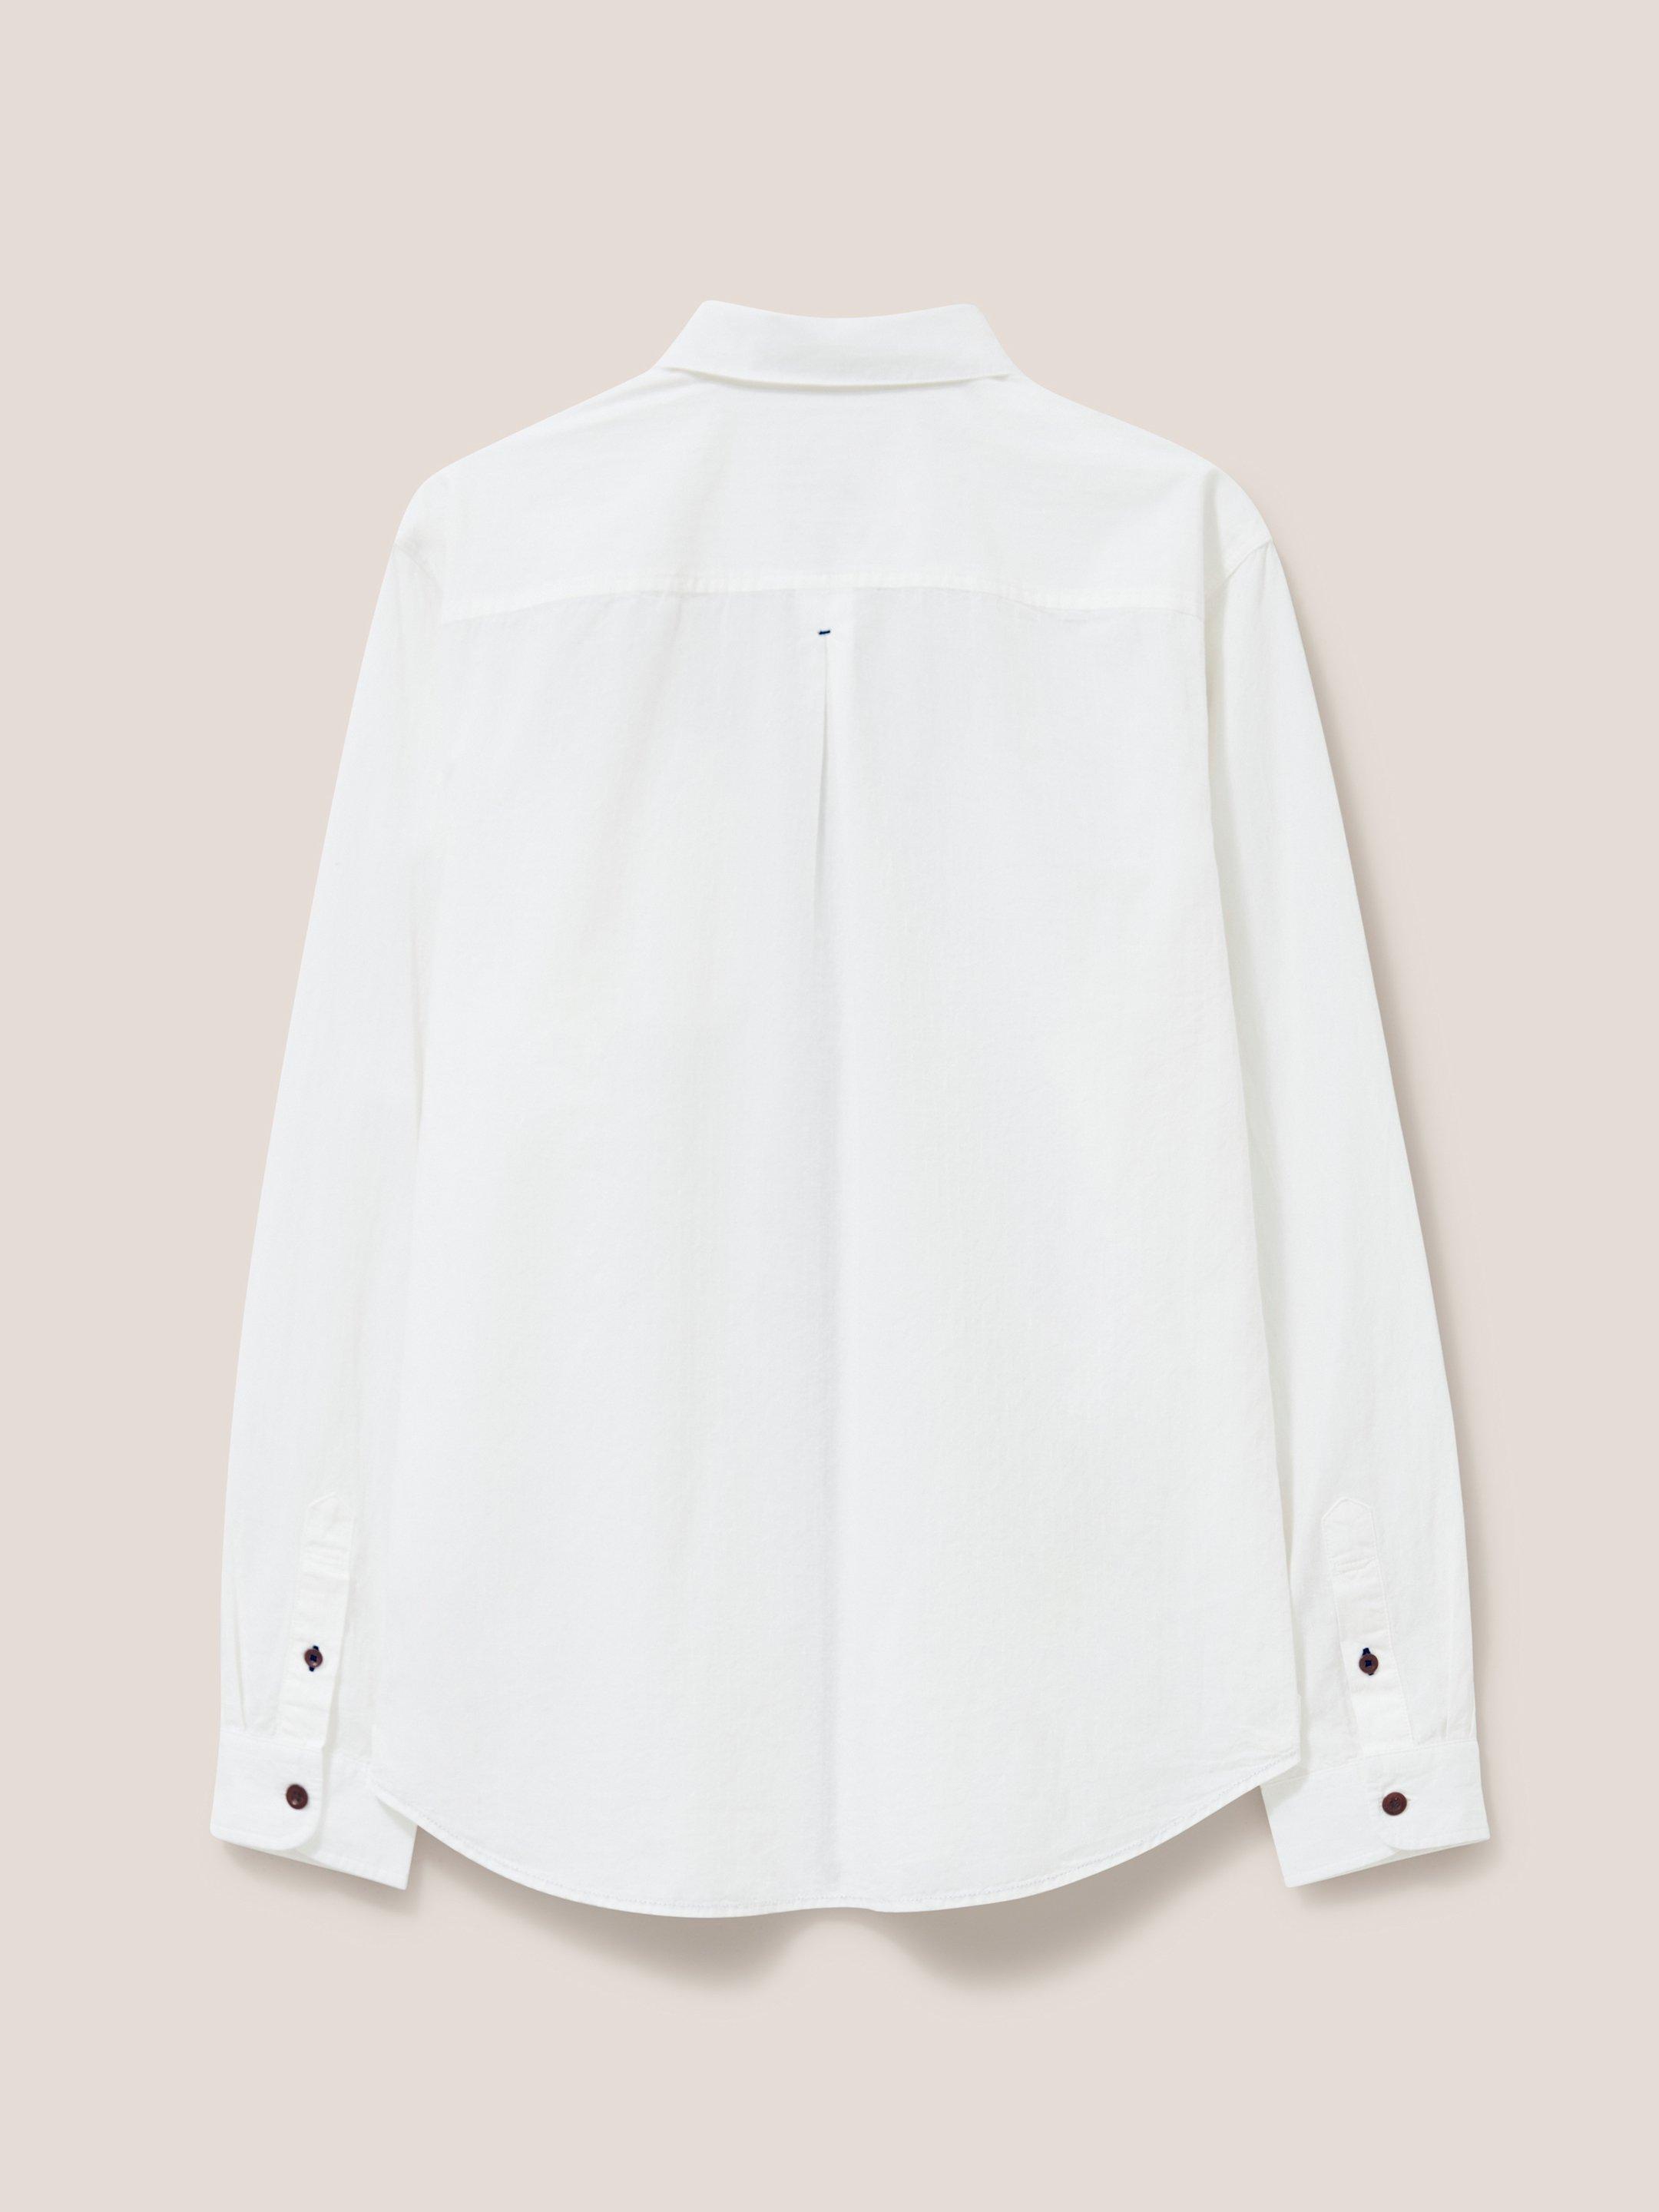 Gaddesby Dobby Shirt in WHITE MLT - FLAT BACK